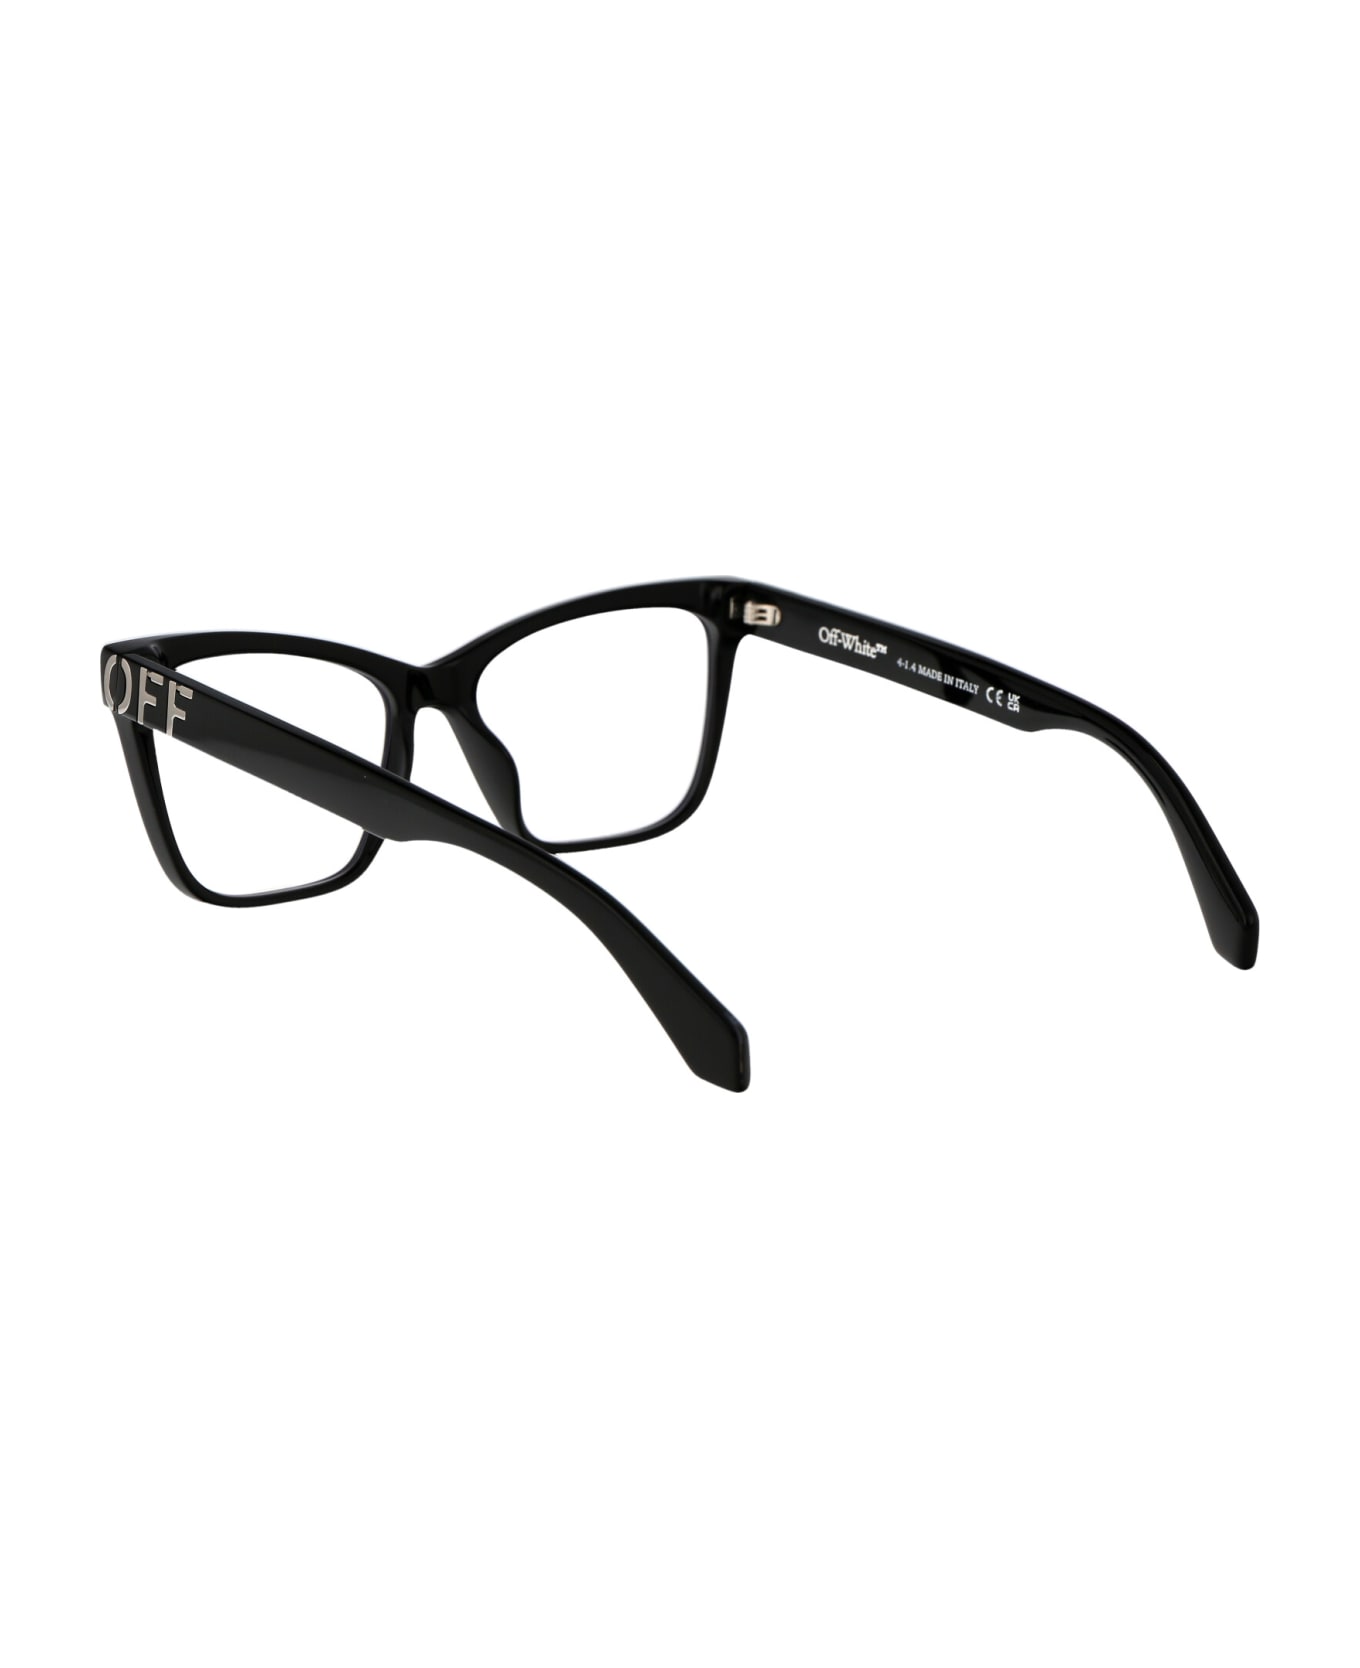 Off-White Optical Style 67 Glasses - 1000 BLACK